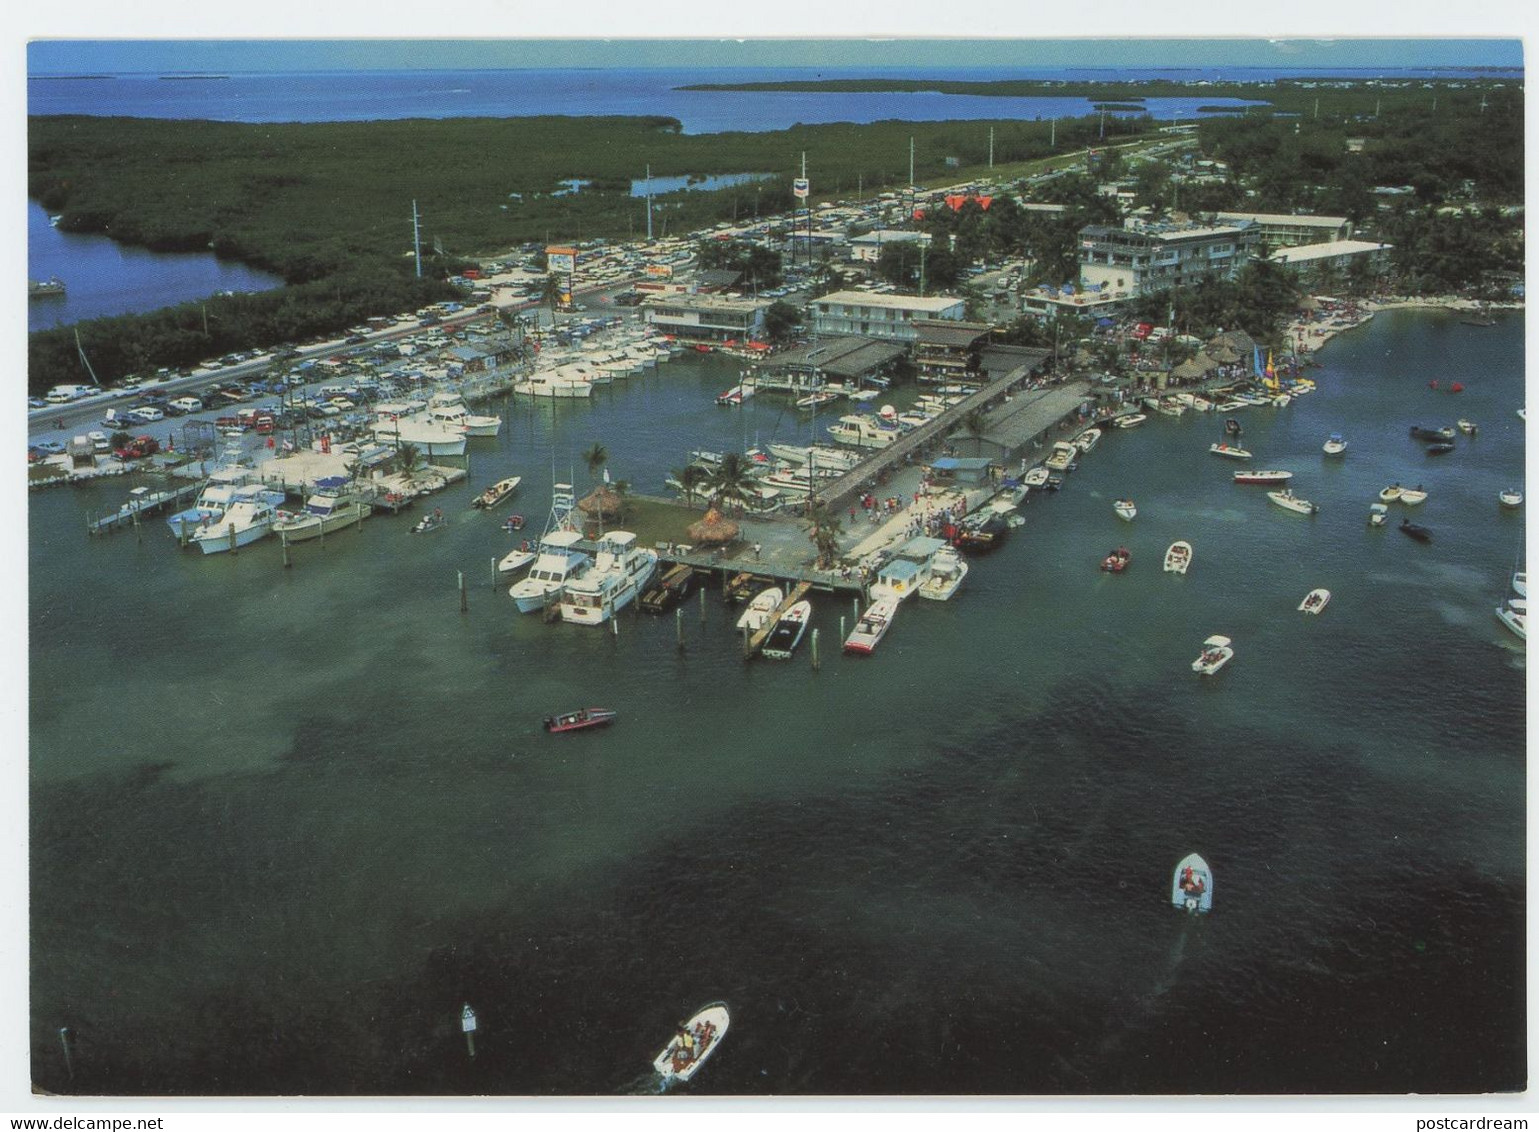 Postcard - Holiday Isle Resort Marina Islamorada FL Keys MARINA AERIAL VIEW - Key West & The Keys